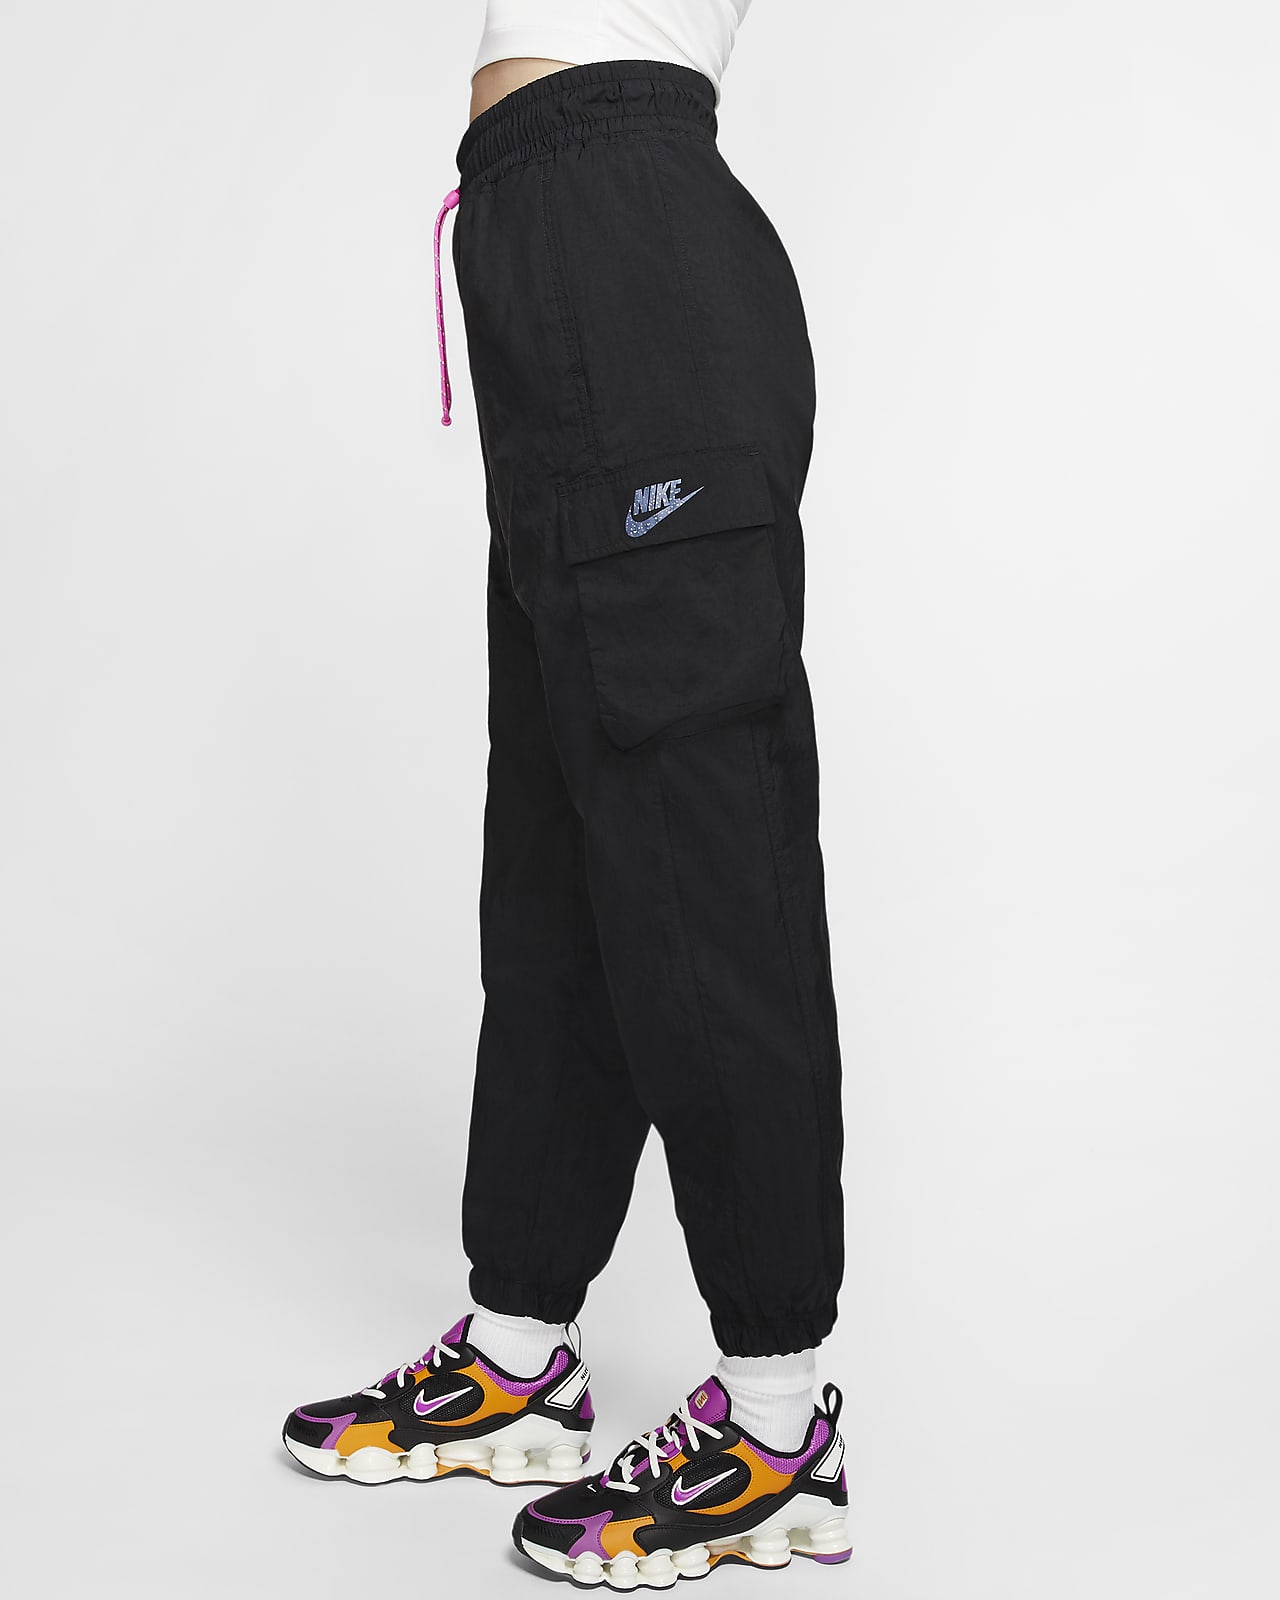 Verdwijnen planter logica Nike Sportswear Icon Clash Women's Woven Pants Hotsell, SAVE 43% - mpgc.net